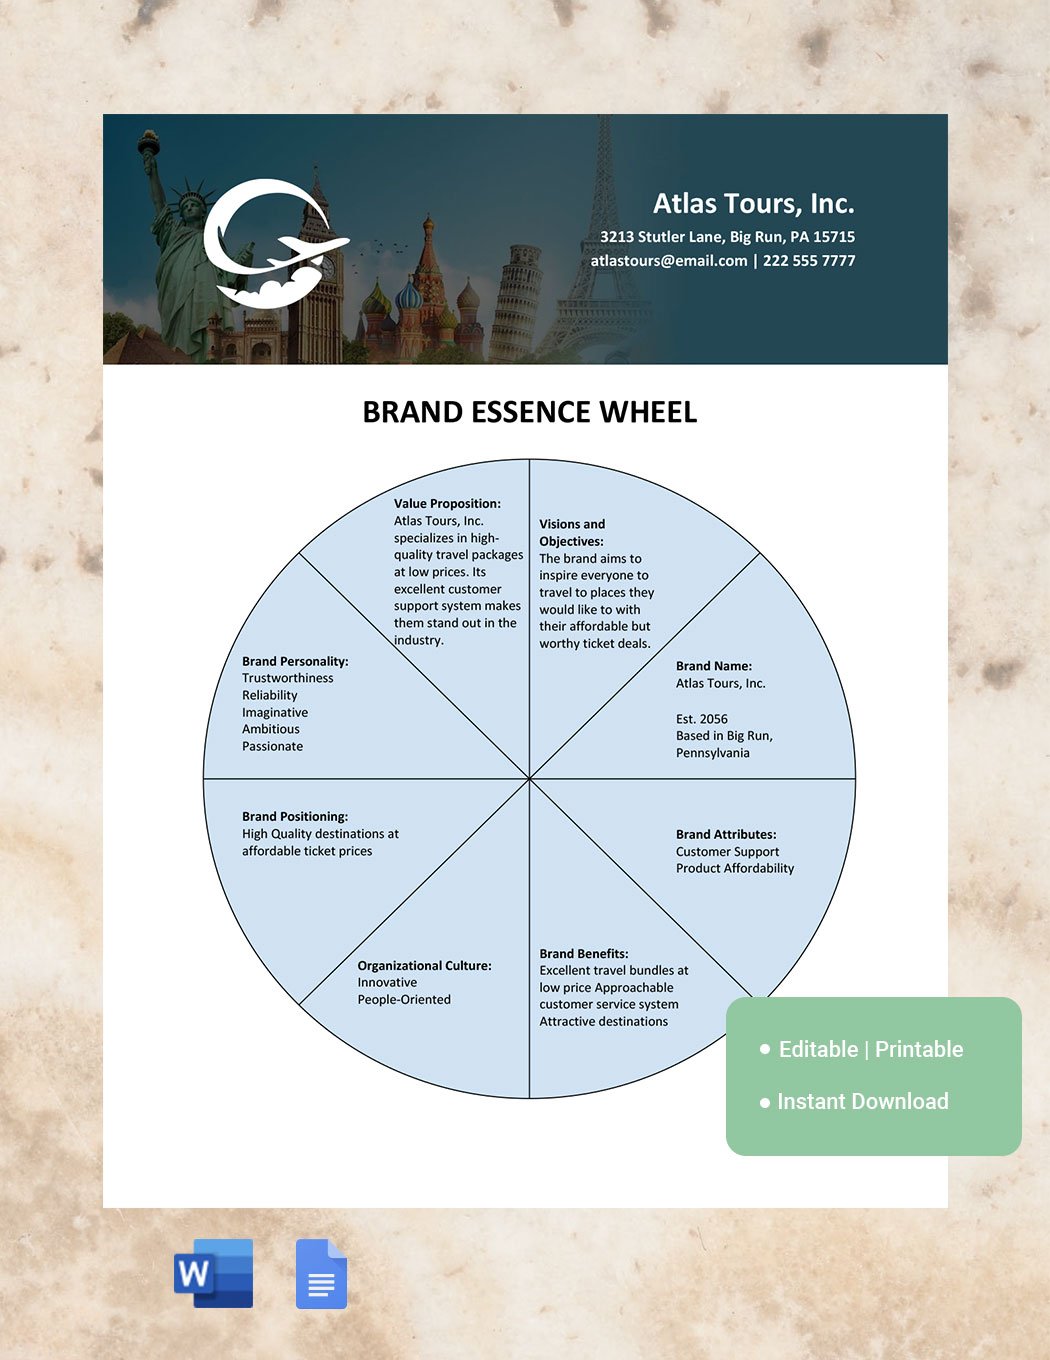 Brand Essence Wheel Template in Word, Google Docs